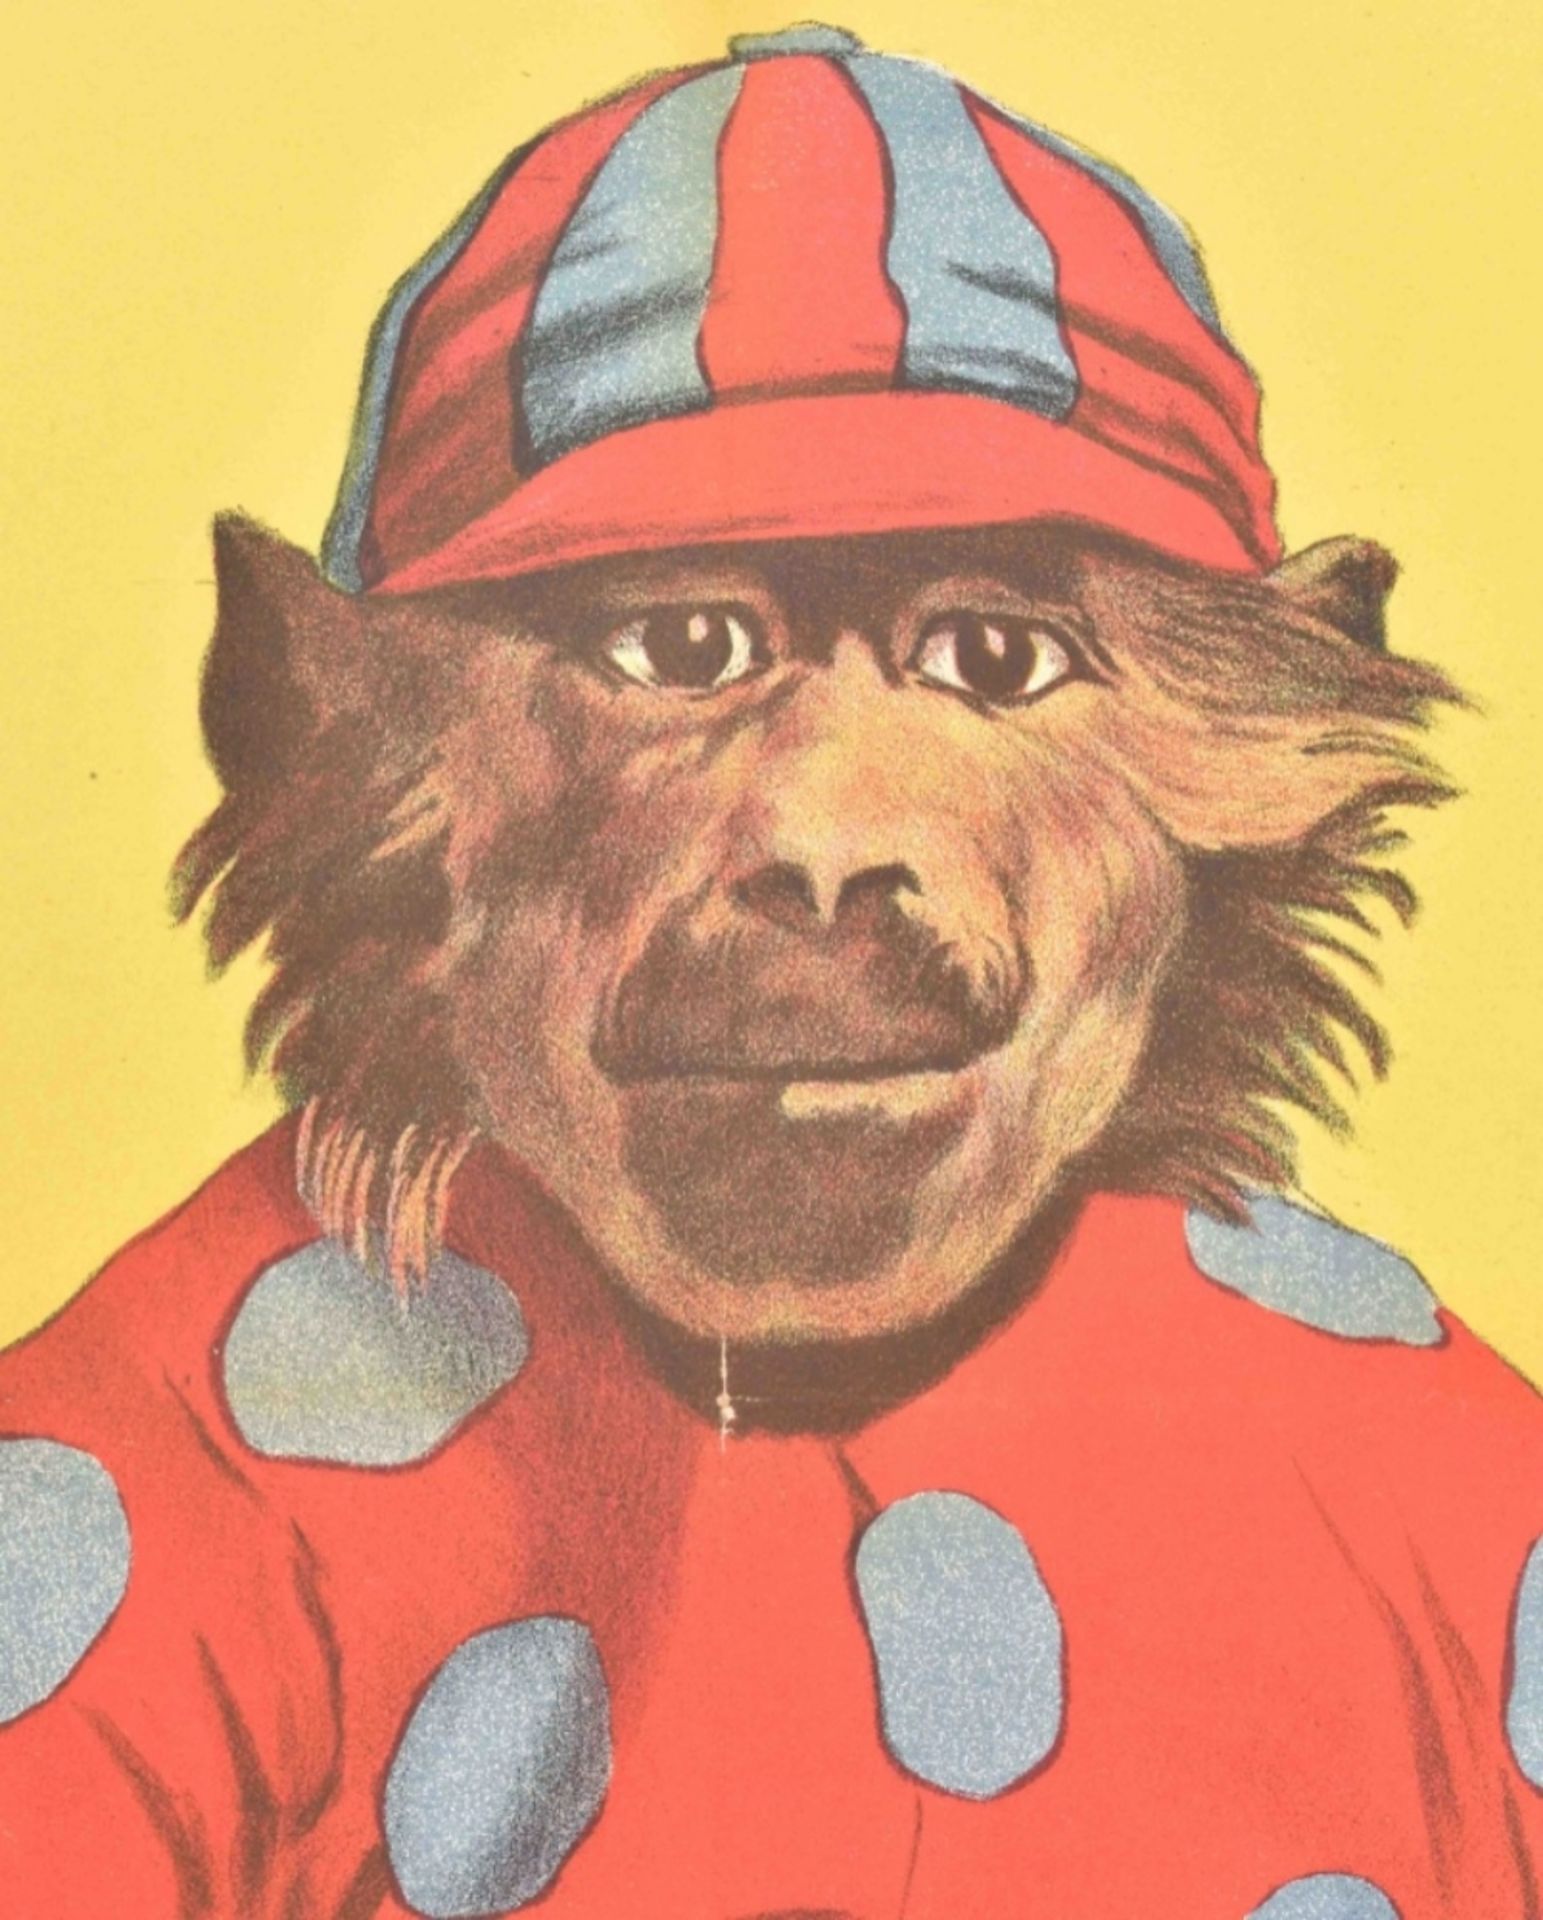 [Animal Dressage] [Monkeys] "Baboon dressed as a Jockey" Friedländer, Hamburg, 1909 - Image 4 of 4